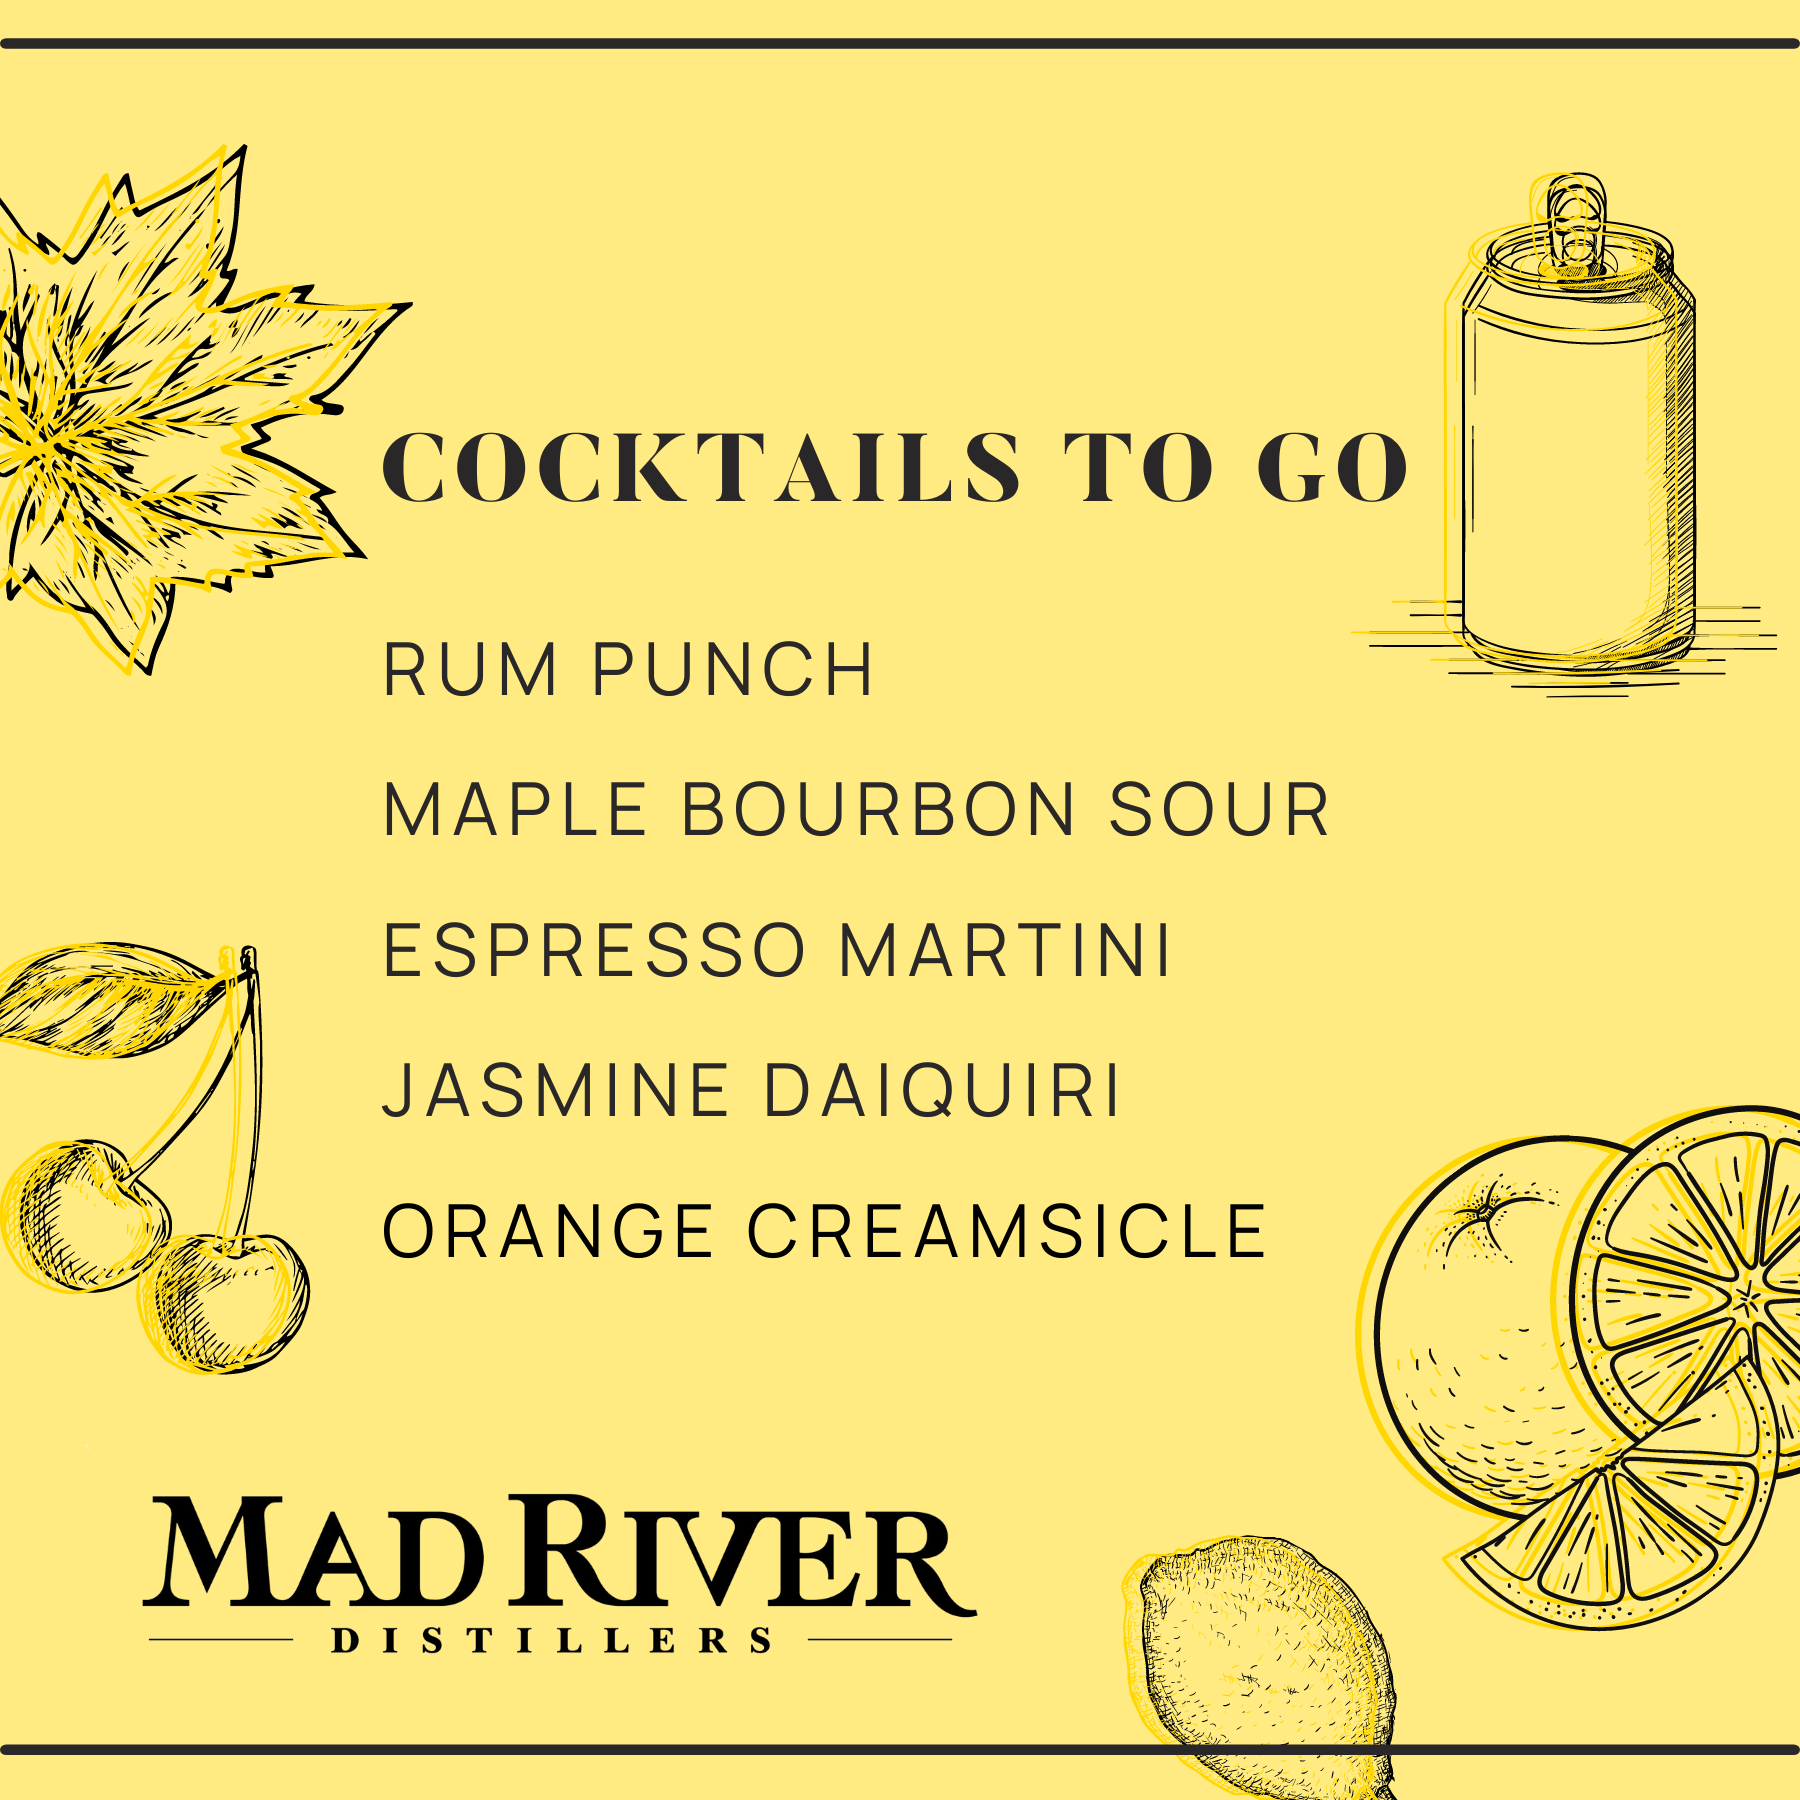 Canned cocktail to go menu includes: Rum Punch, Maple Bourbon Sour, Espresso Martini, Jasmine Daiquiri, Orange Creamsicle